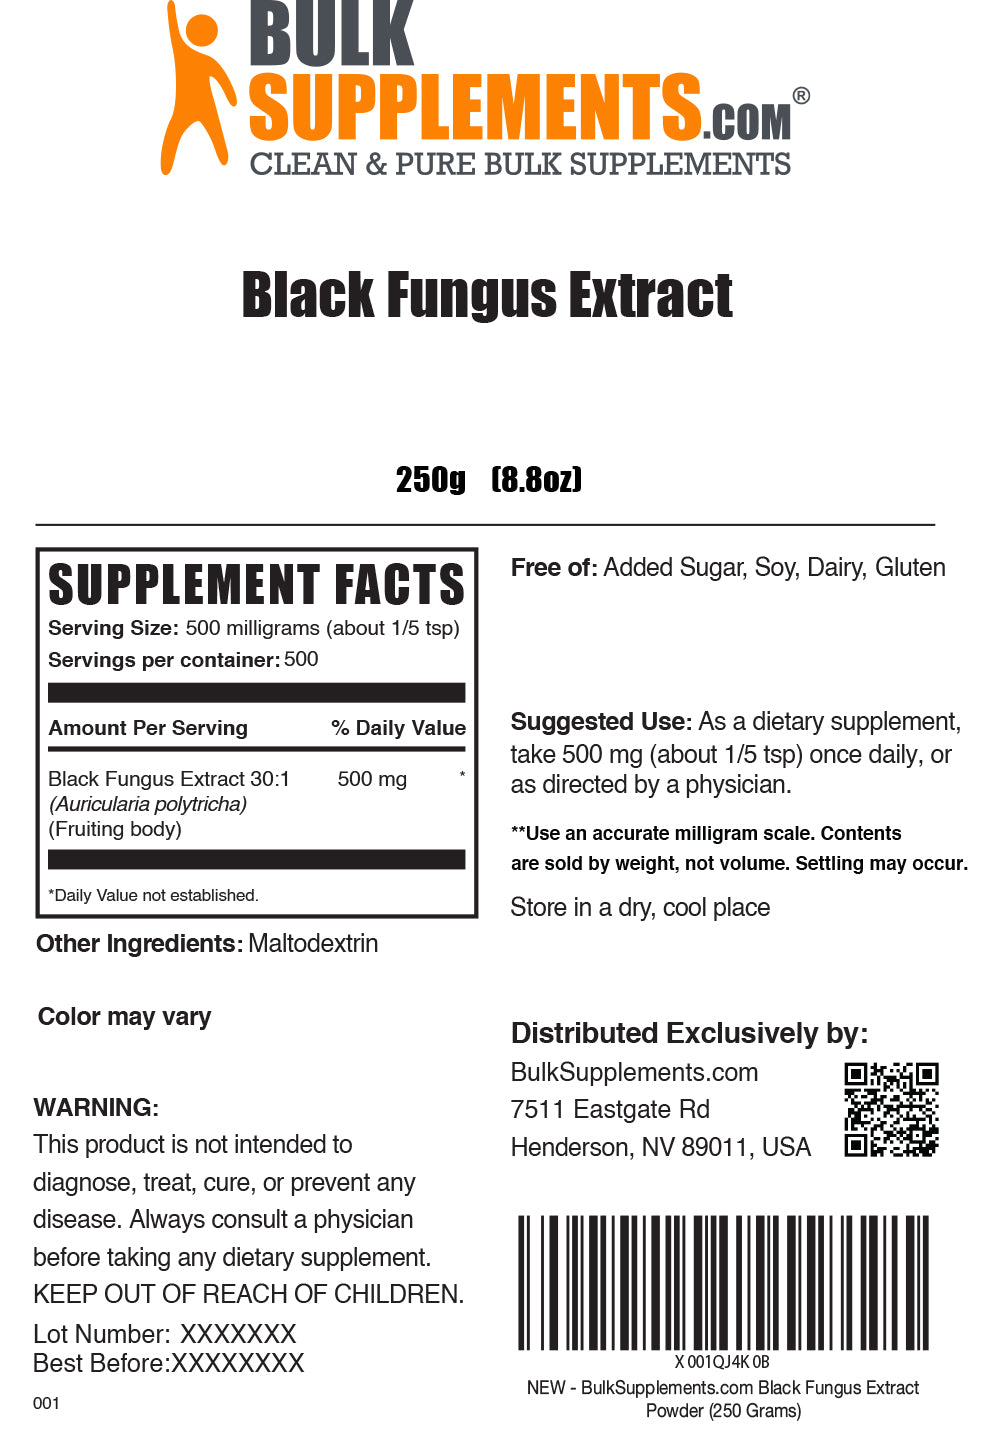 Black mushroom extract powder label 250g